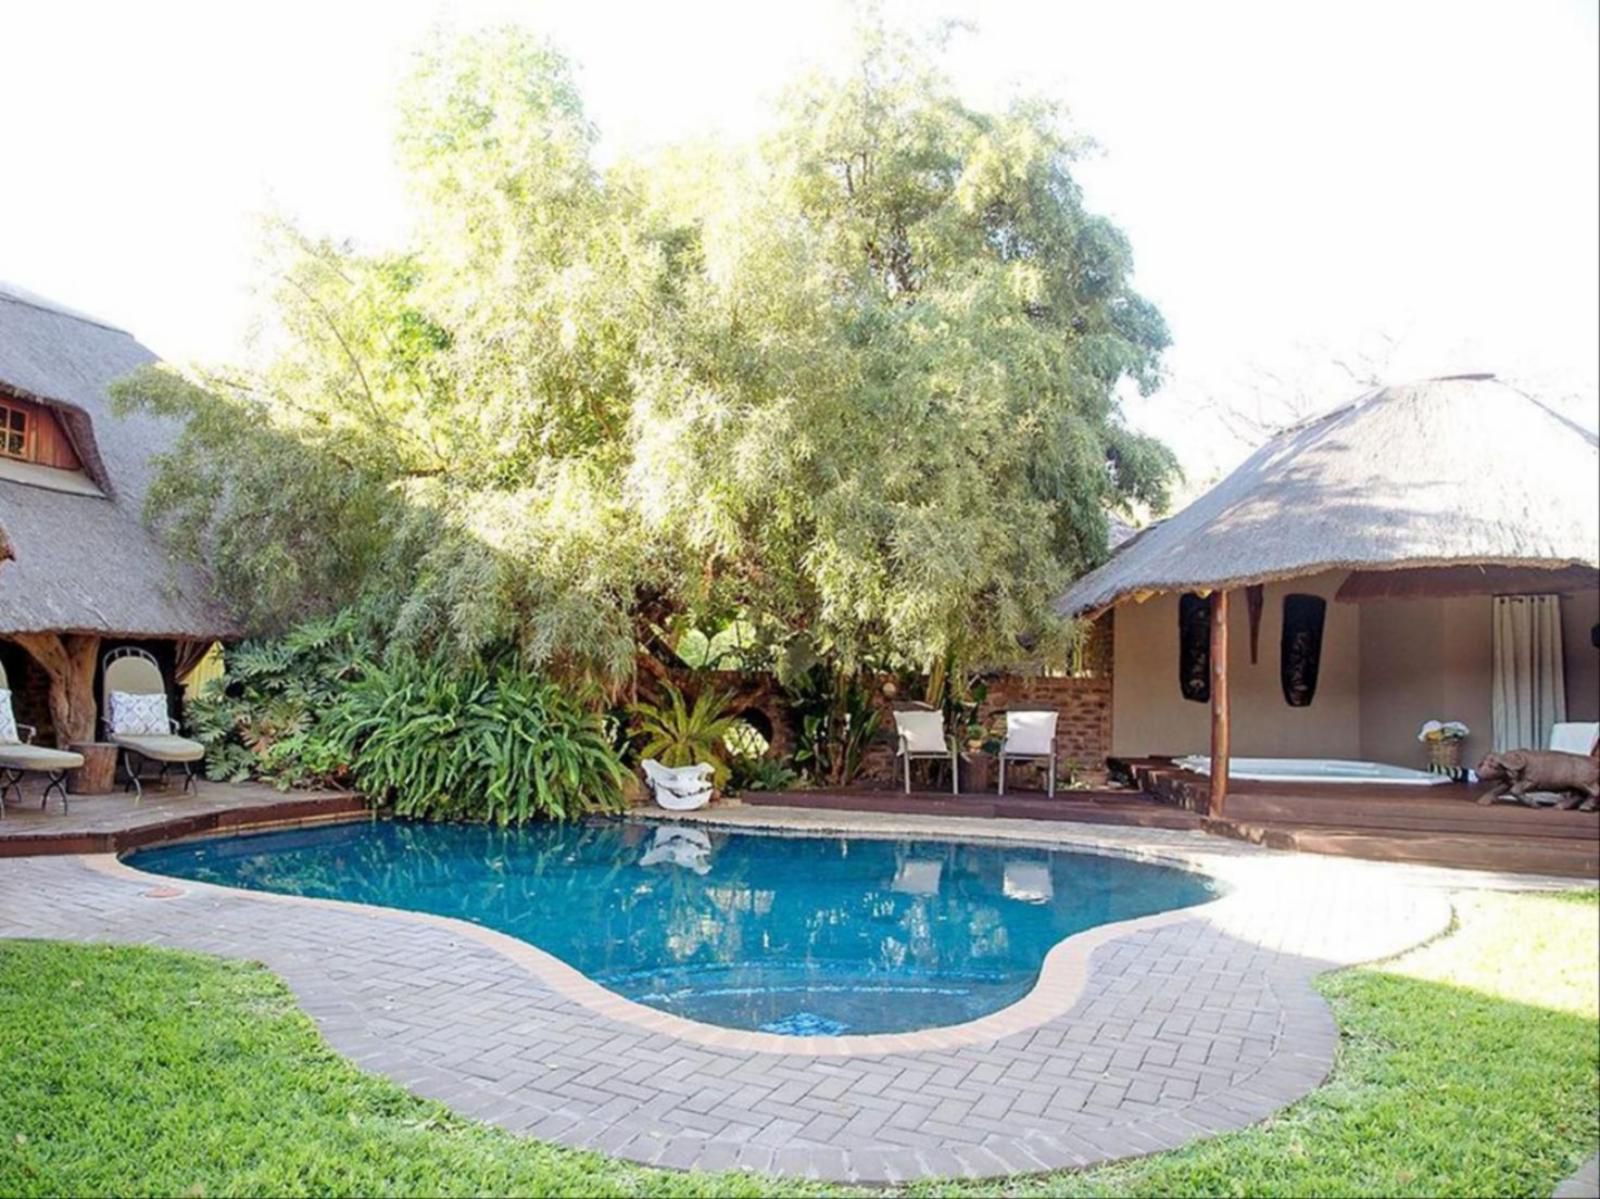 Umqhele Camp Thabazimbi Limpopo Province South Africa Garden, Nature, Plant, Swimming Pool